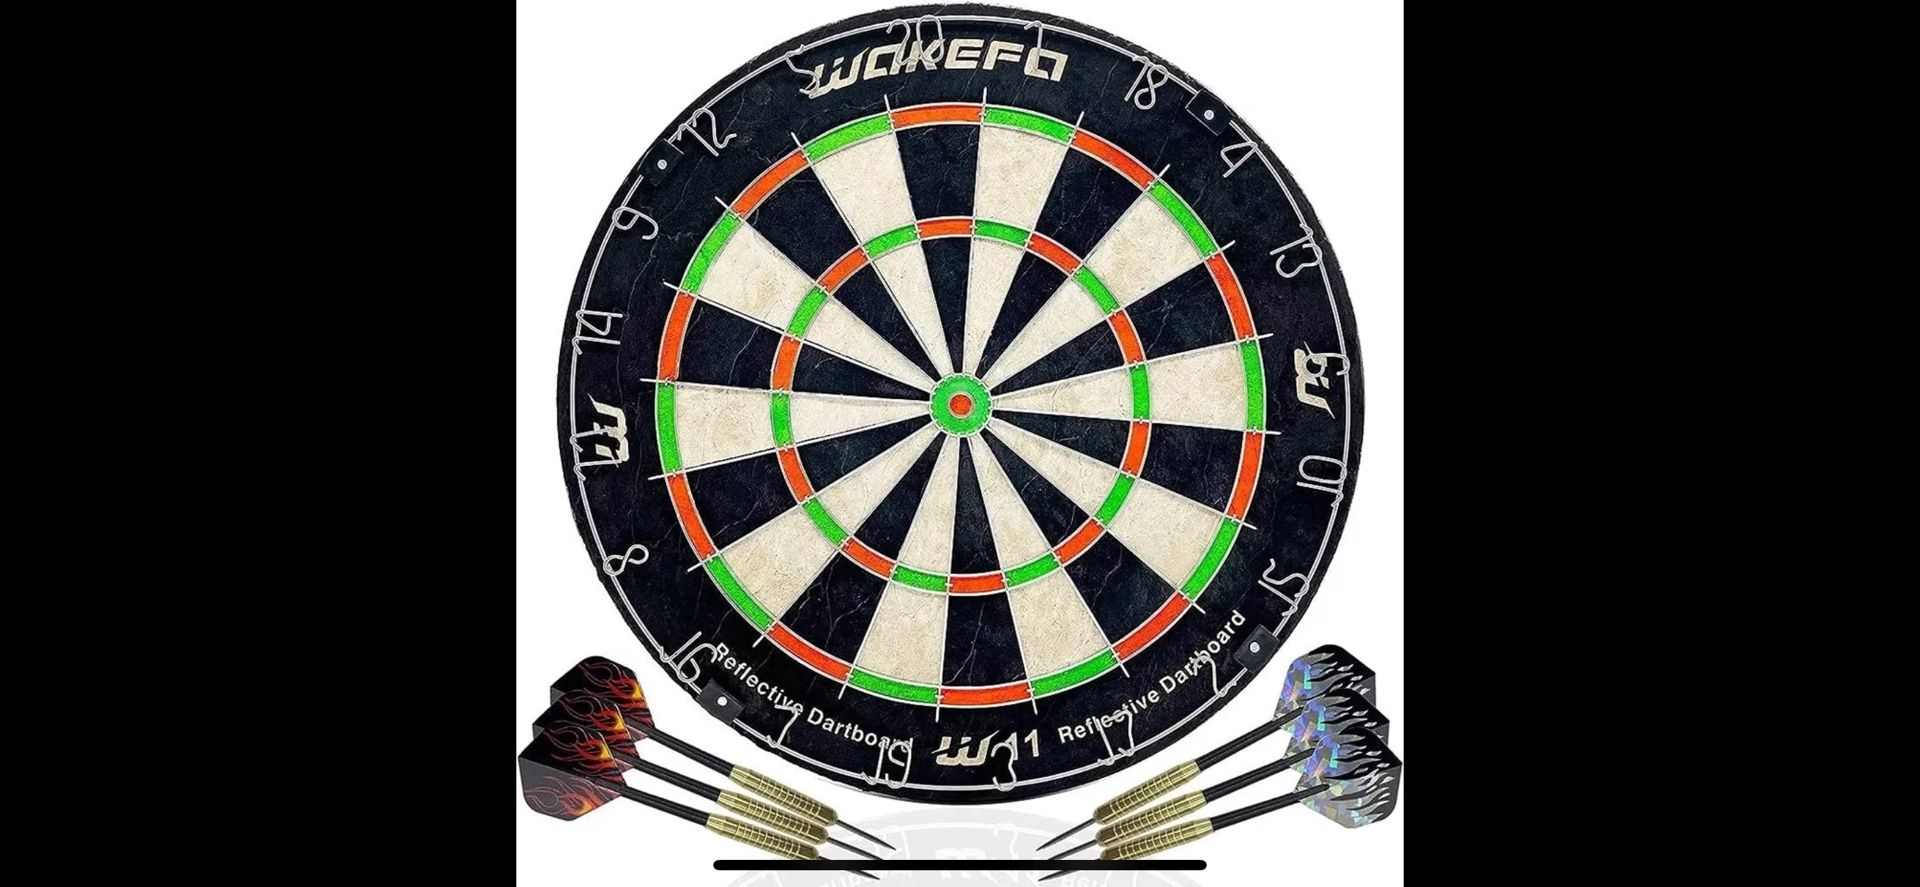 Professional Dartboard Set Includes 6 Steel Tip Darts, Fluorescence Dartboard